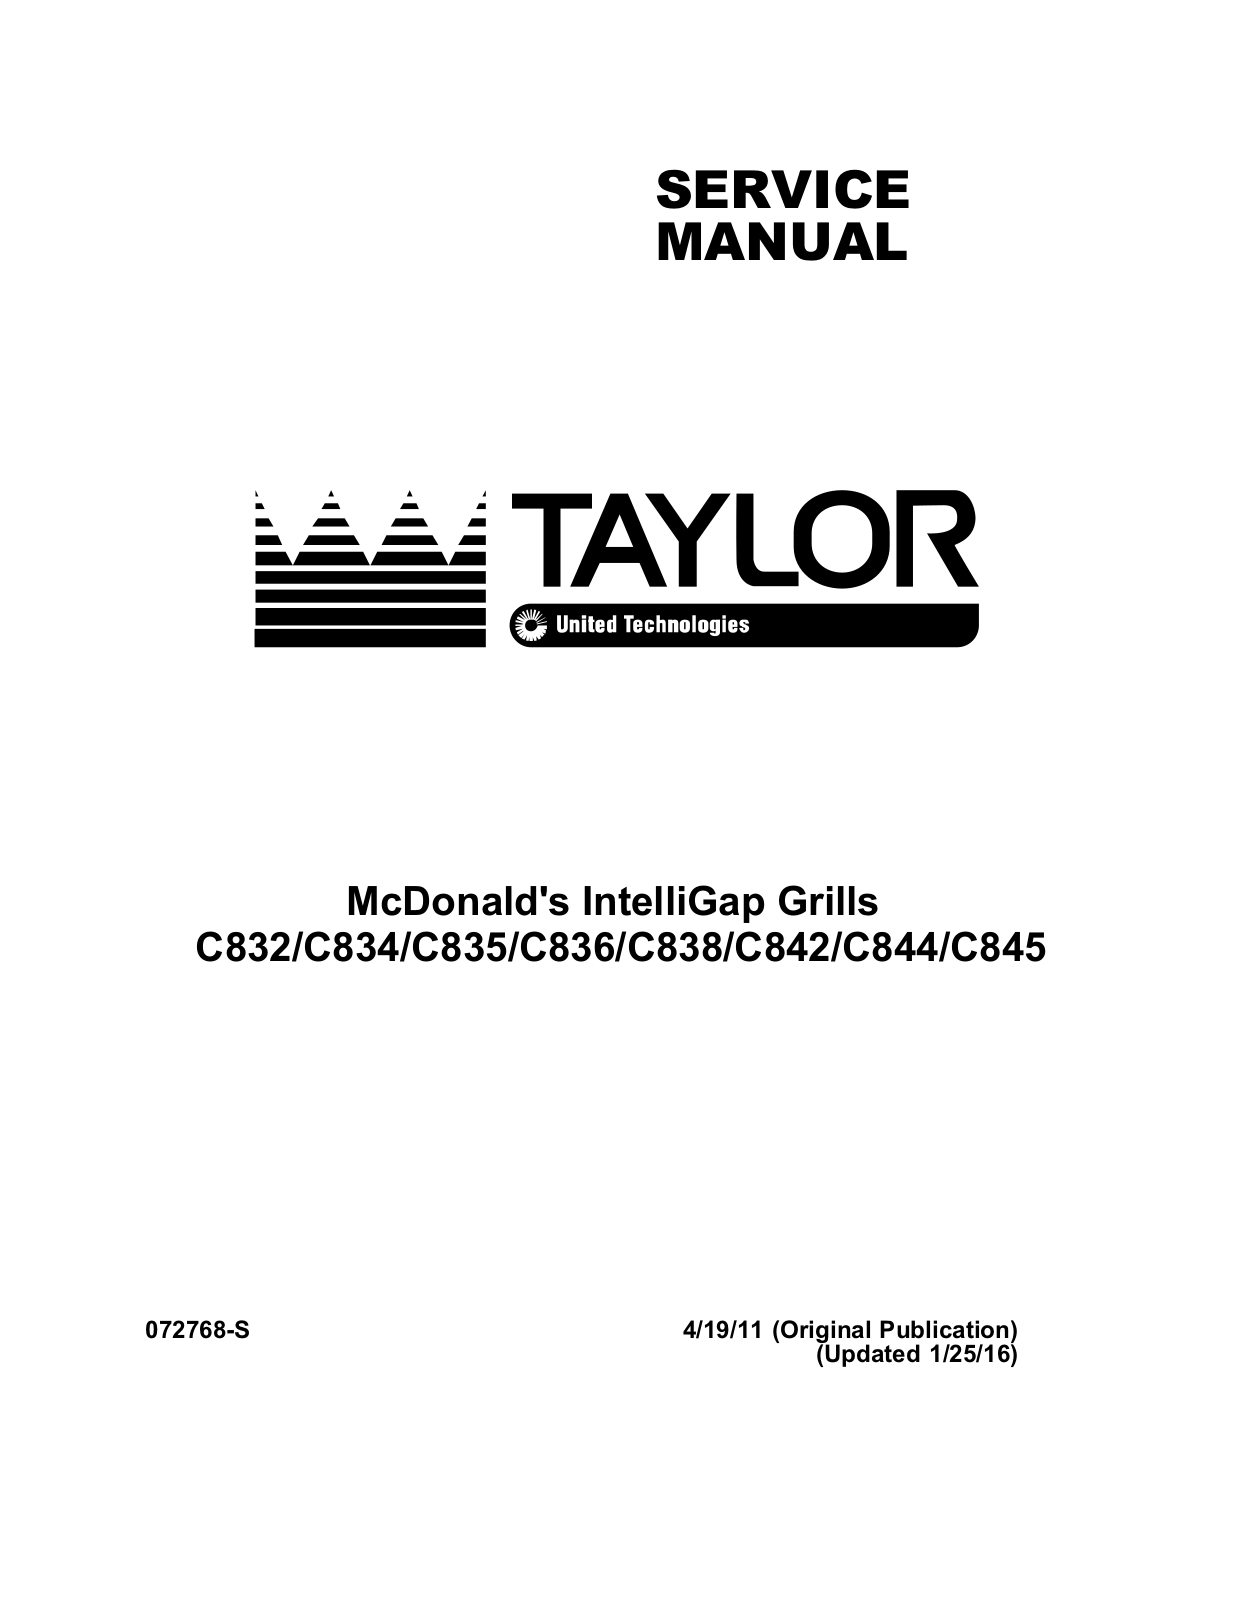 TAYLOR C832, C834, C835, C836, C838 Service Manual